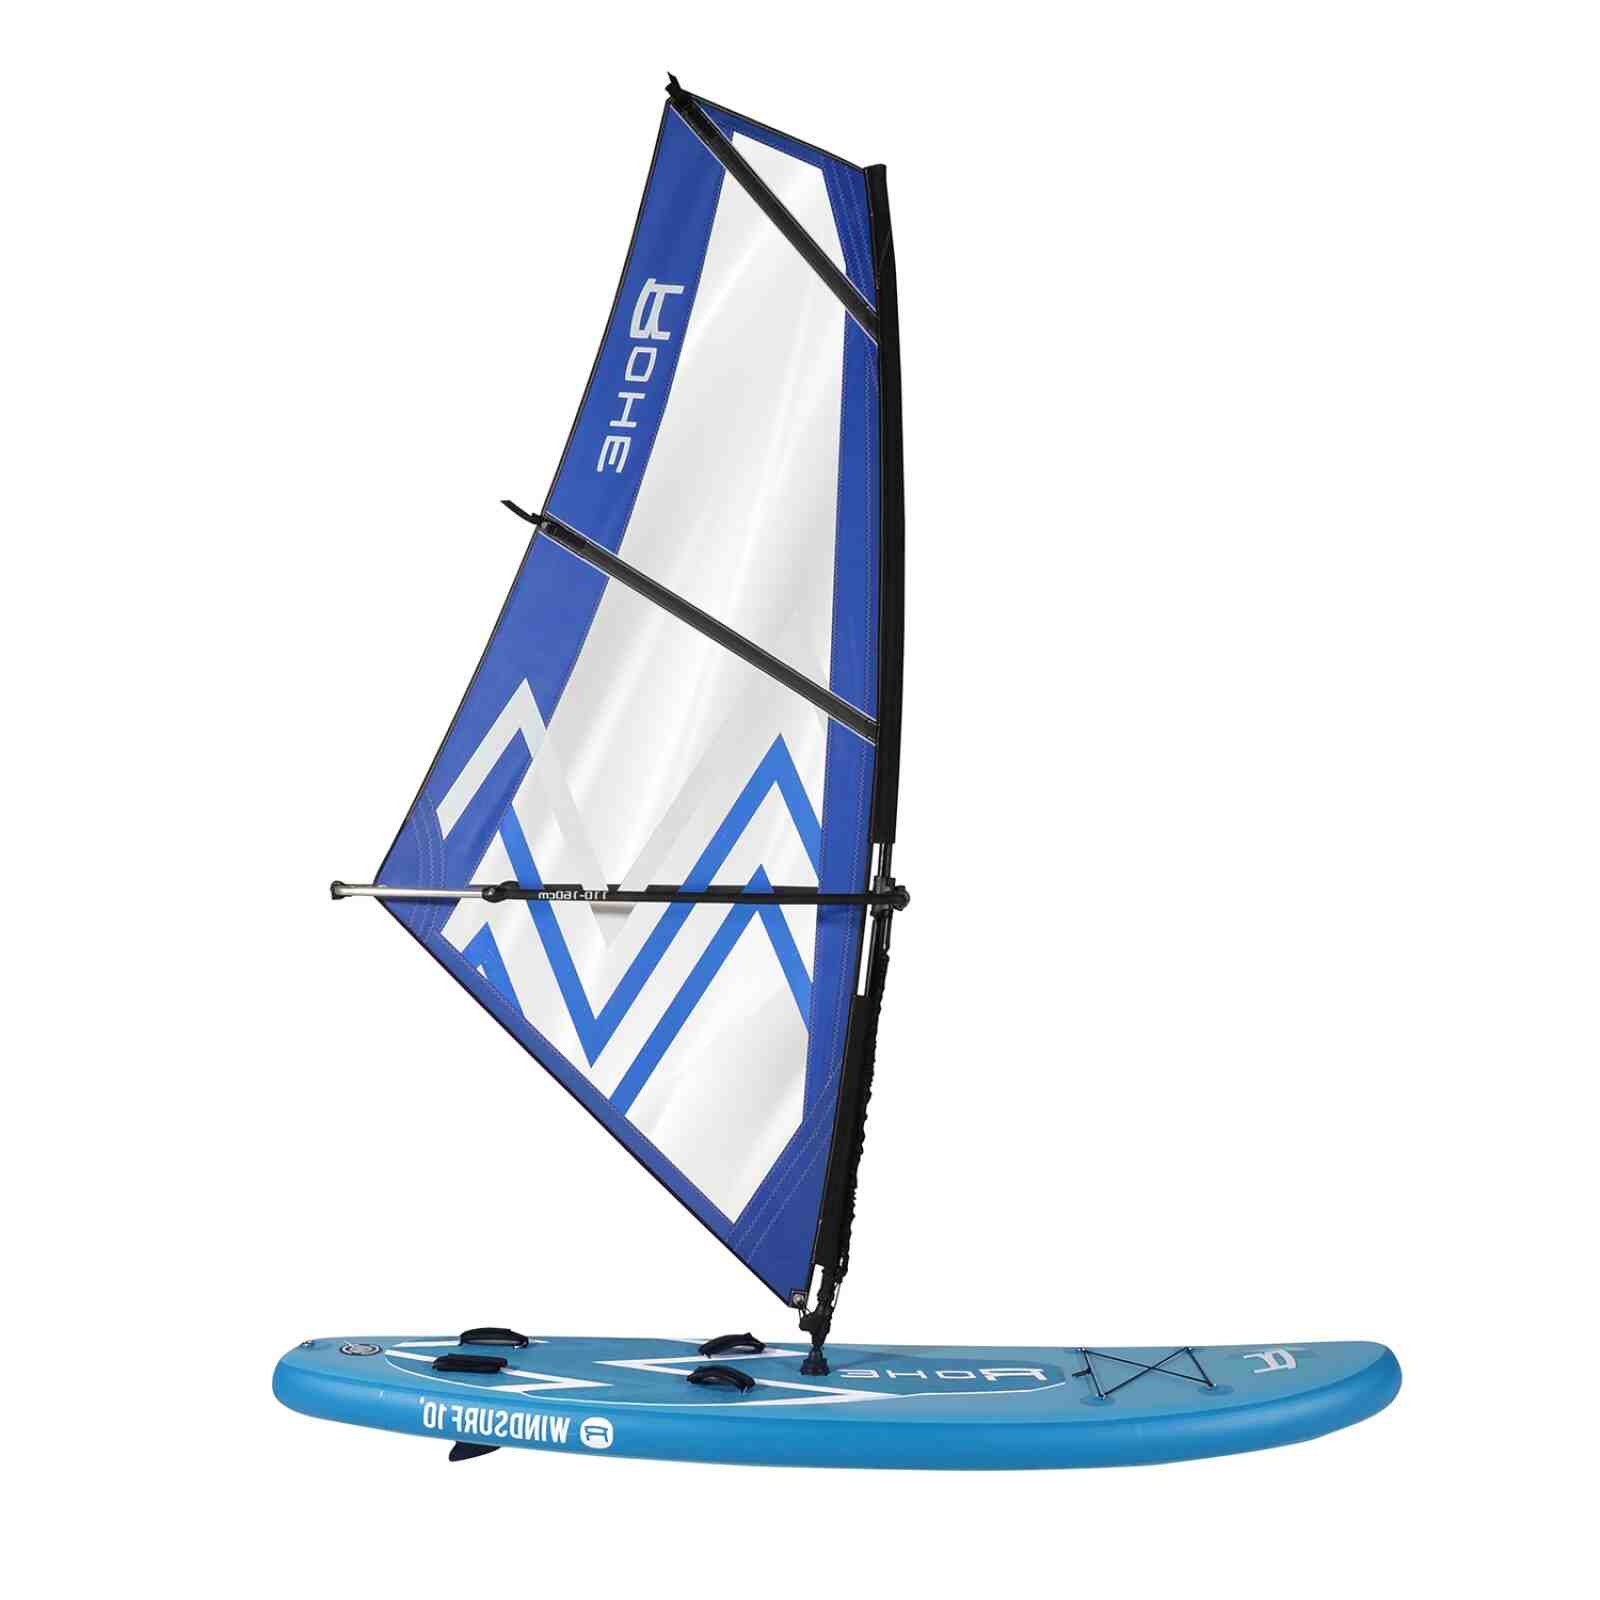 Quelle taille aileron windsurf ?